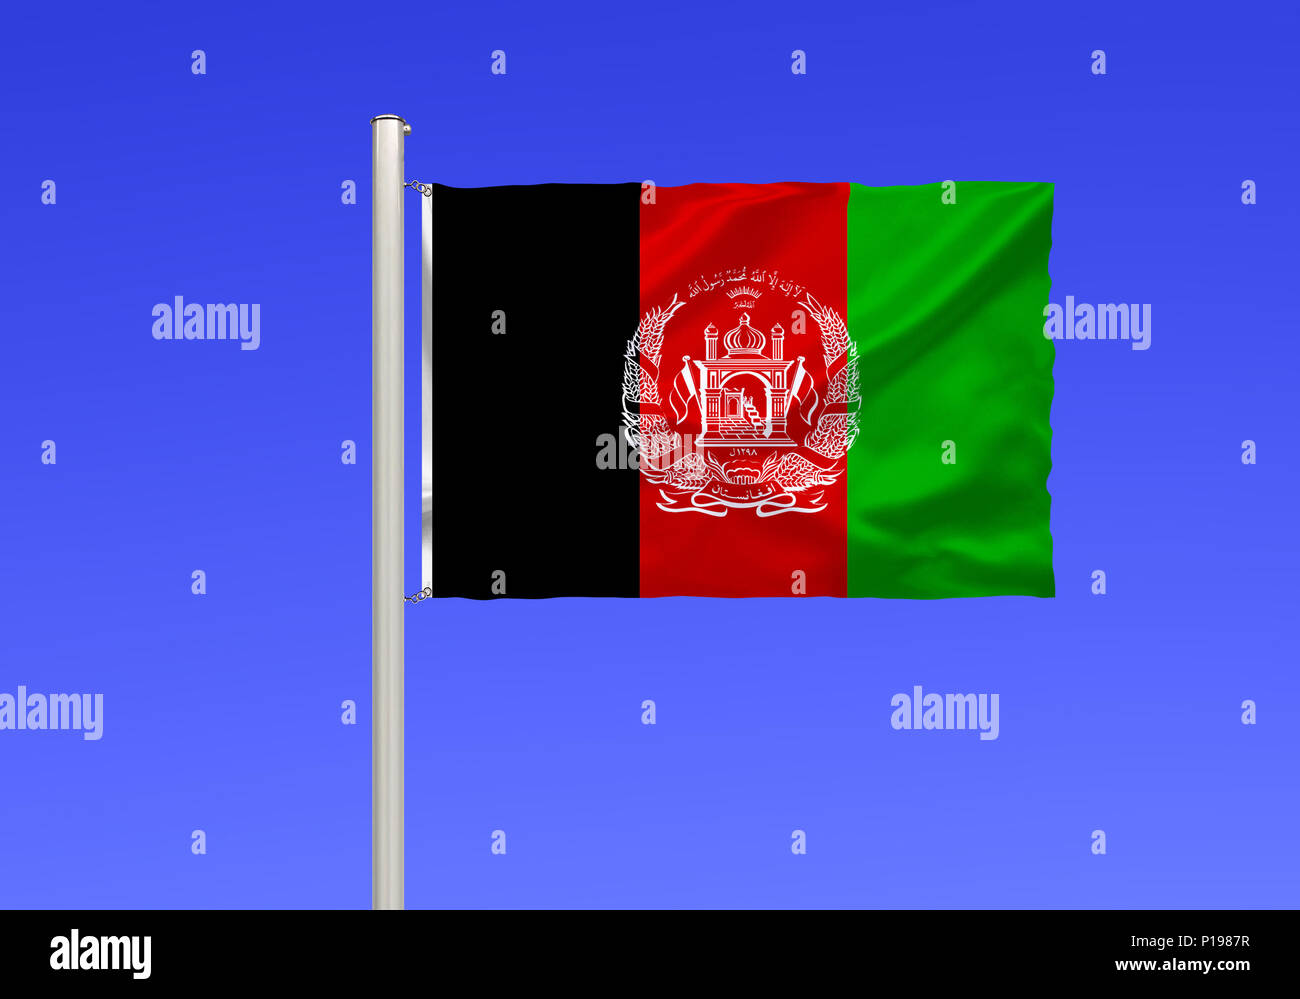 https://c8.alamy.com/comp/P1987R/flag-of-afghanistan-flagge-von-afghanistan-P1987R.jpg